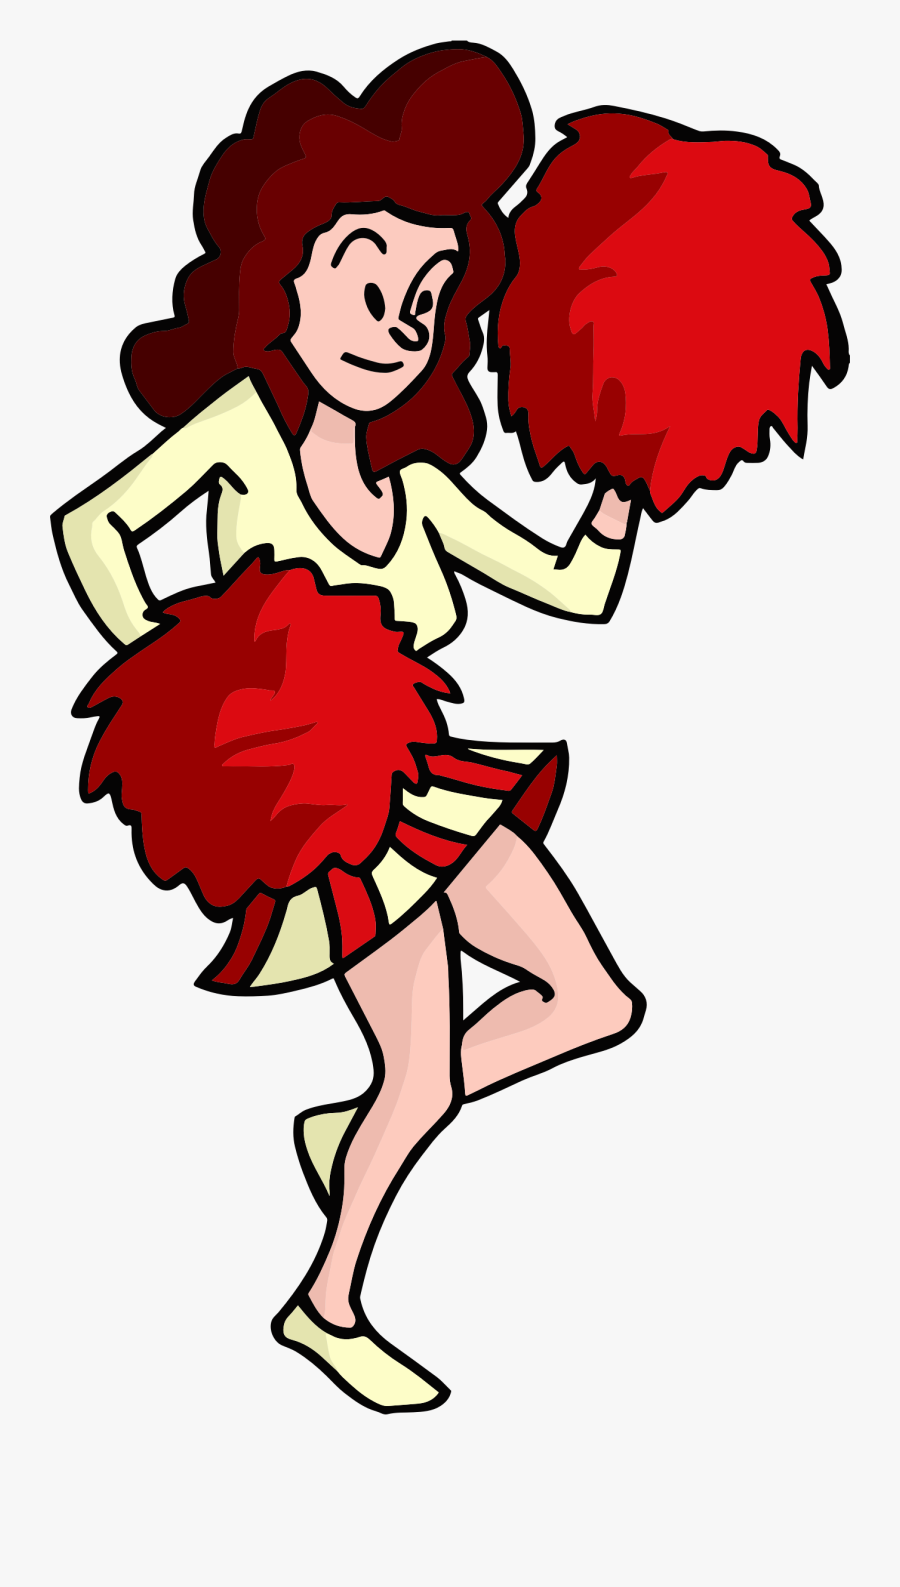 Cartoon Cheerleader - Cheerleader Cartoon Clipart, Transparent Clipart